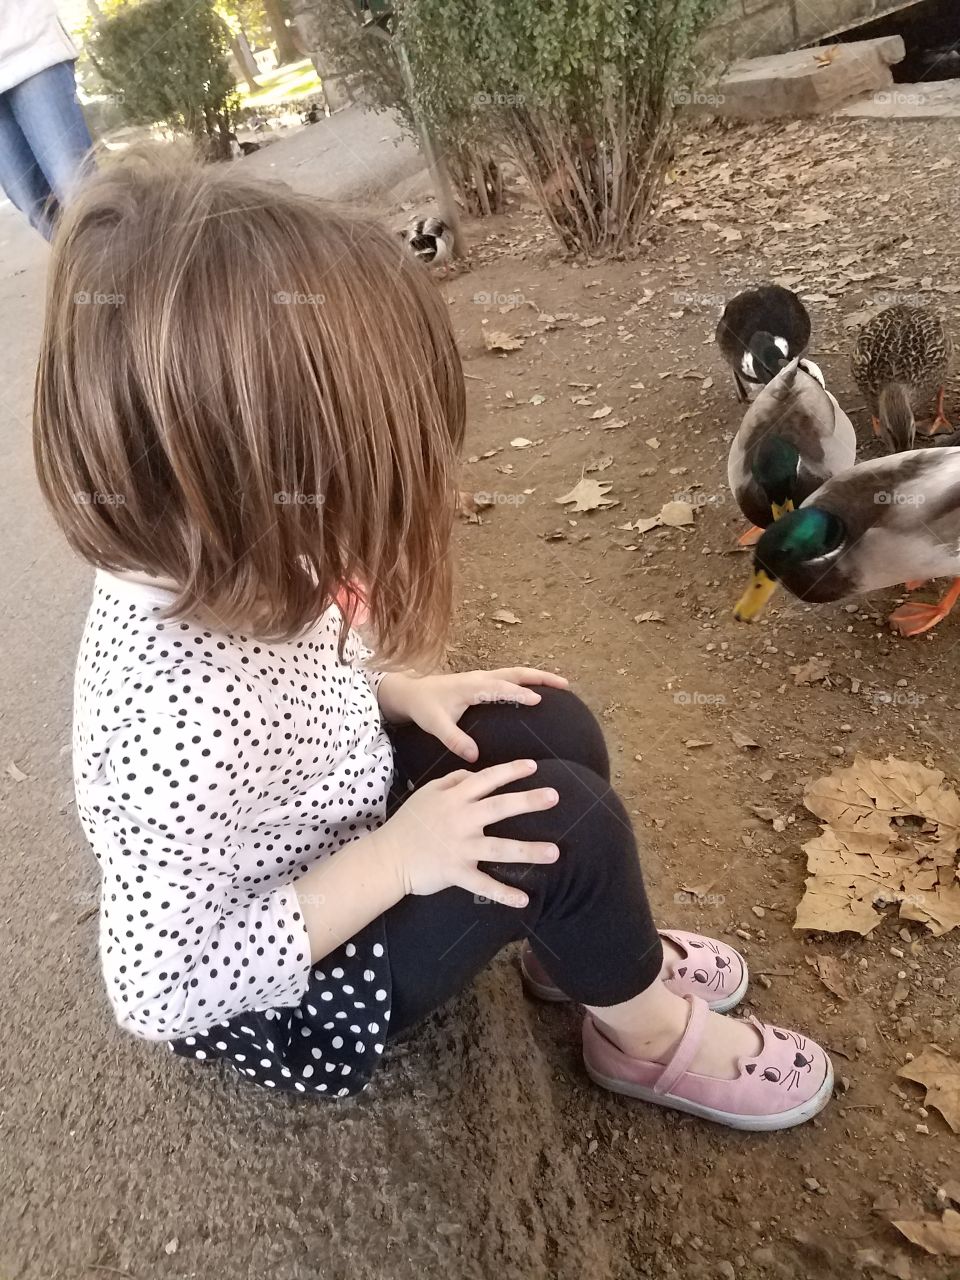 Josie is a little bit afraid of the ducks she's feeding